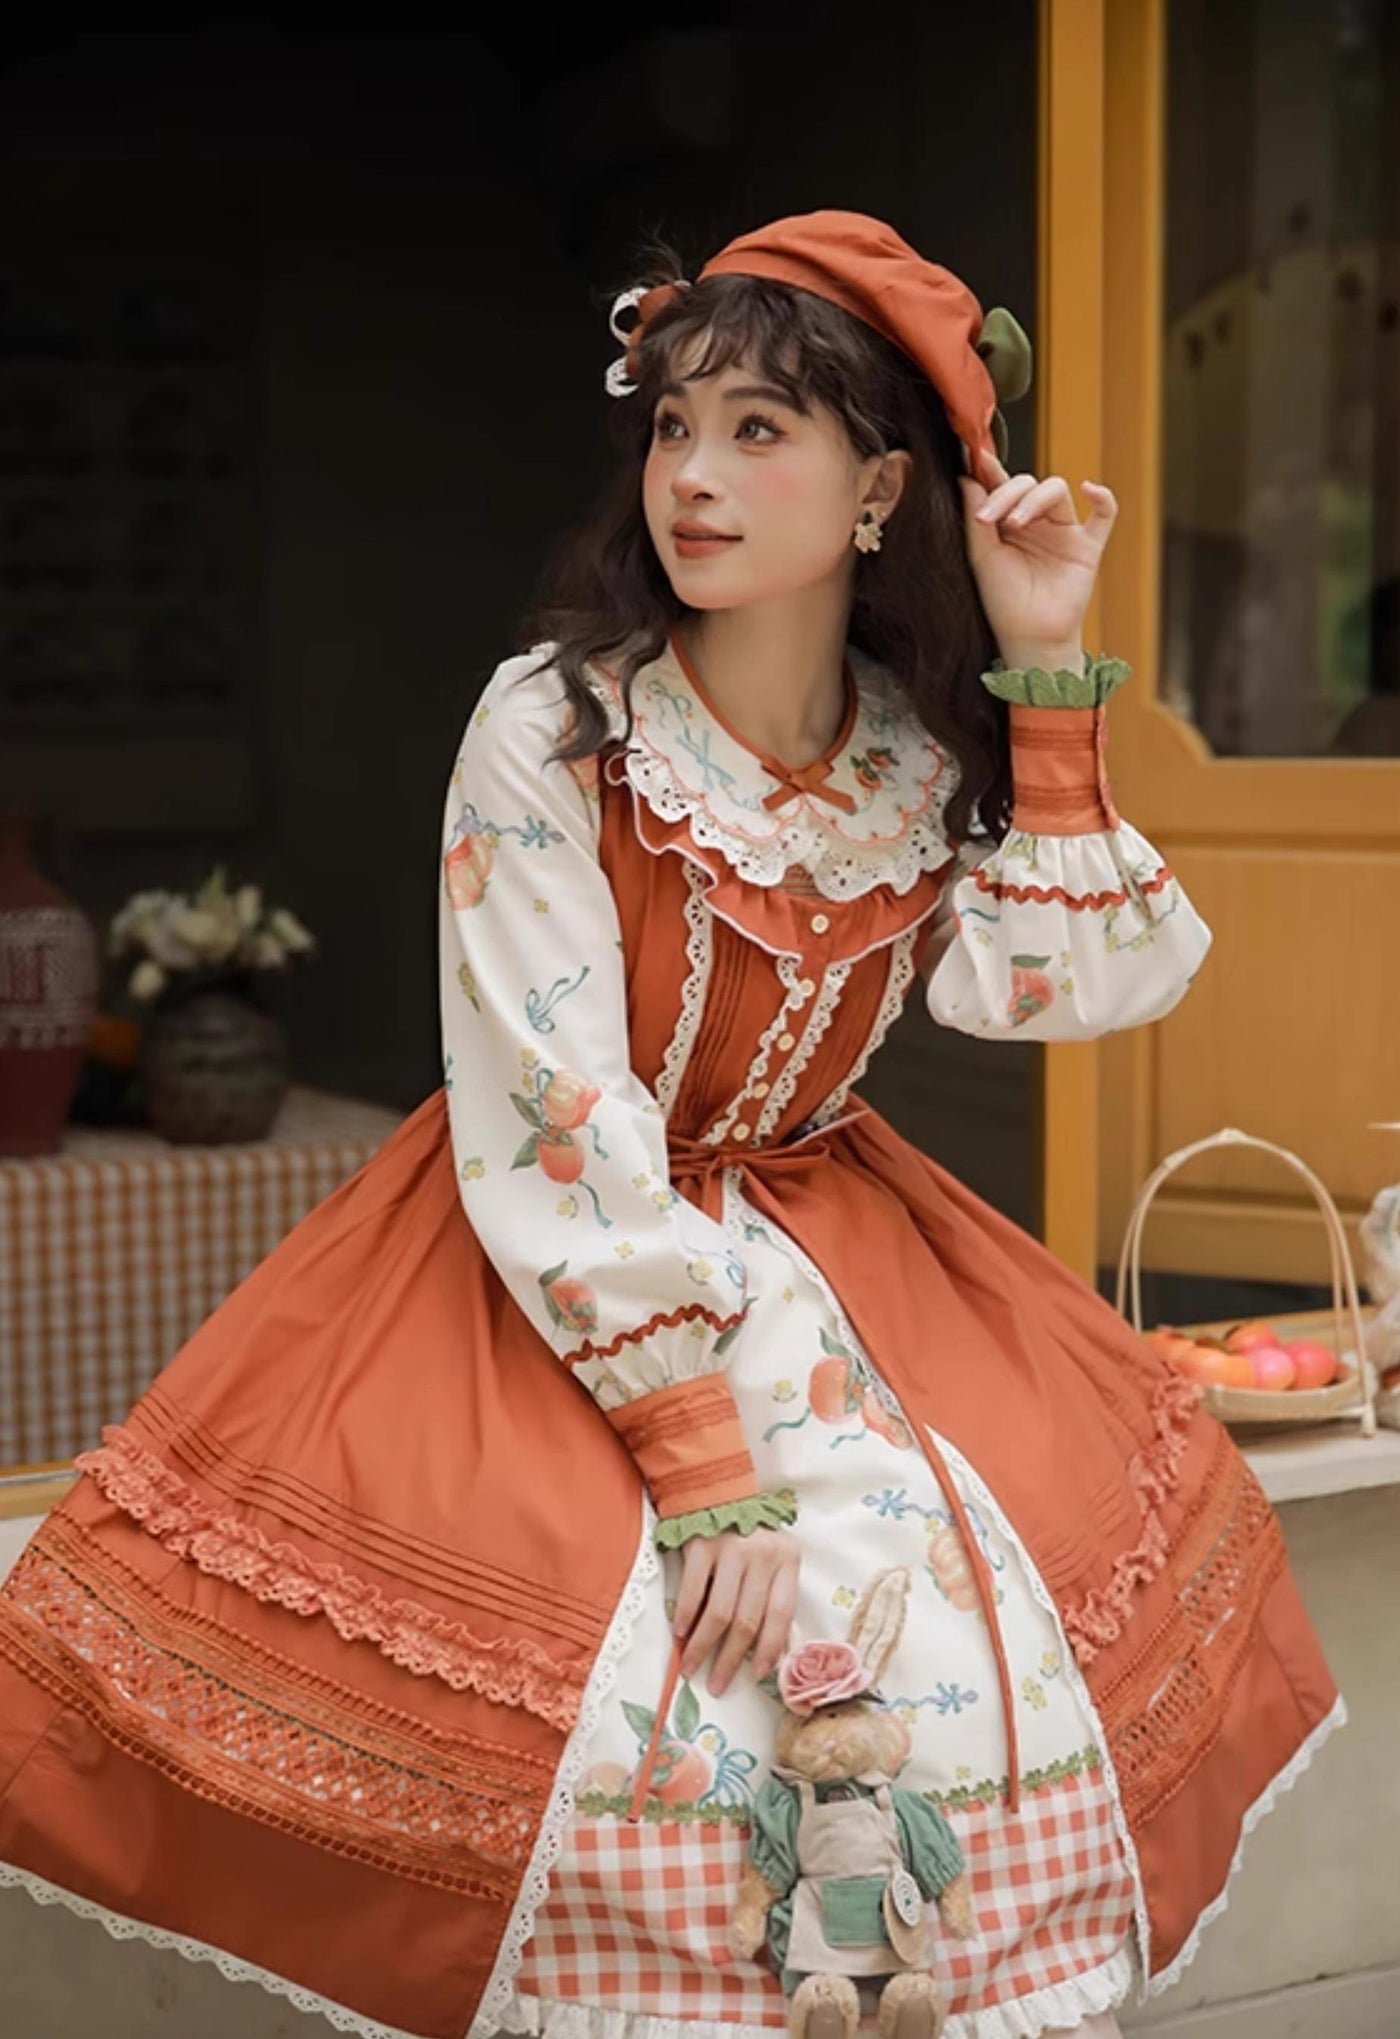 Flower and Pearl Box~Persimmon~Autumn Persimmon Print Lolita OP JSK SK Dress   